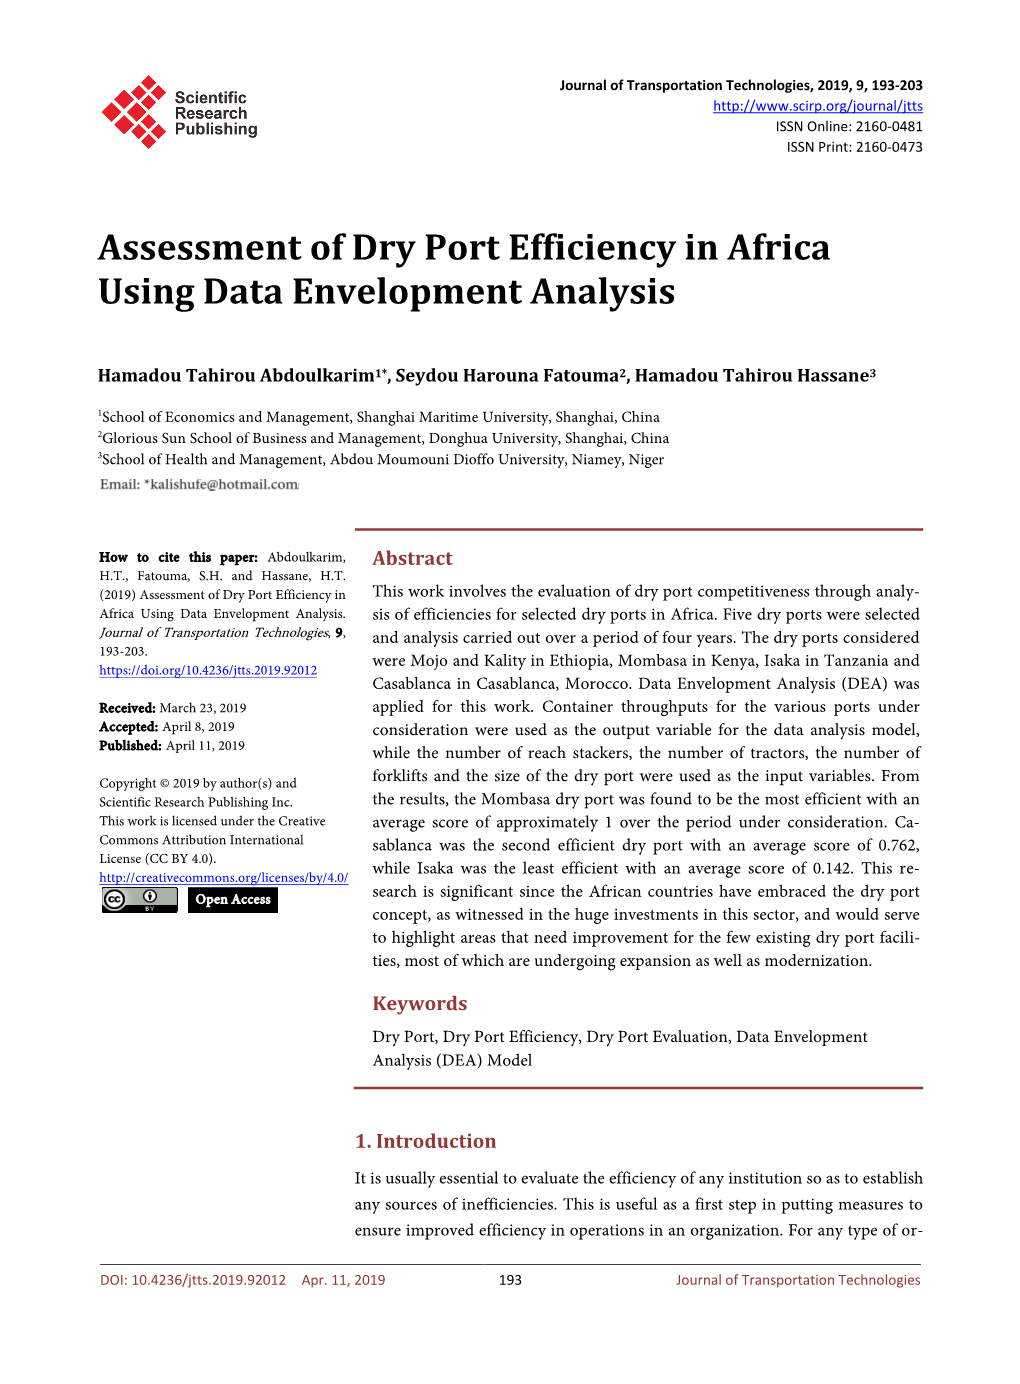 Assessment of Dry Port Efficiency in Africa Using Data Envelopment Analysis